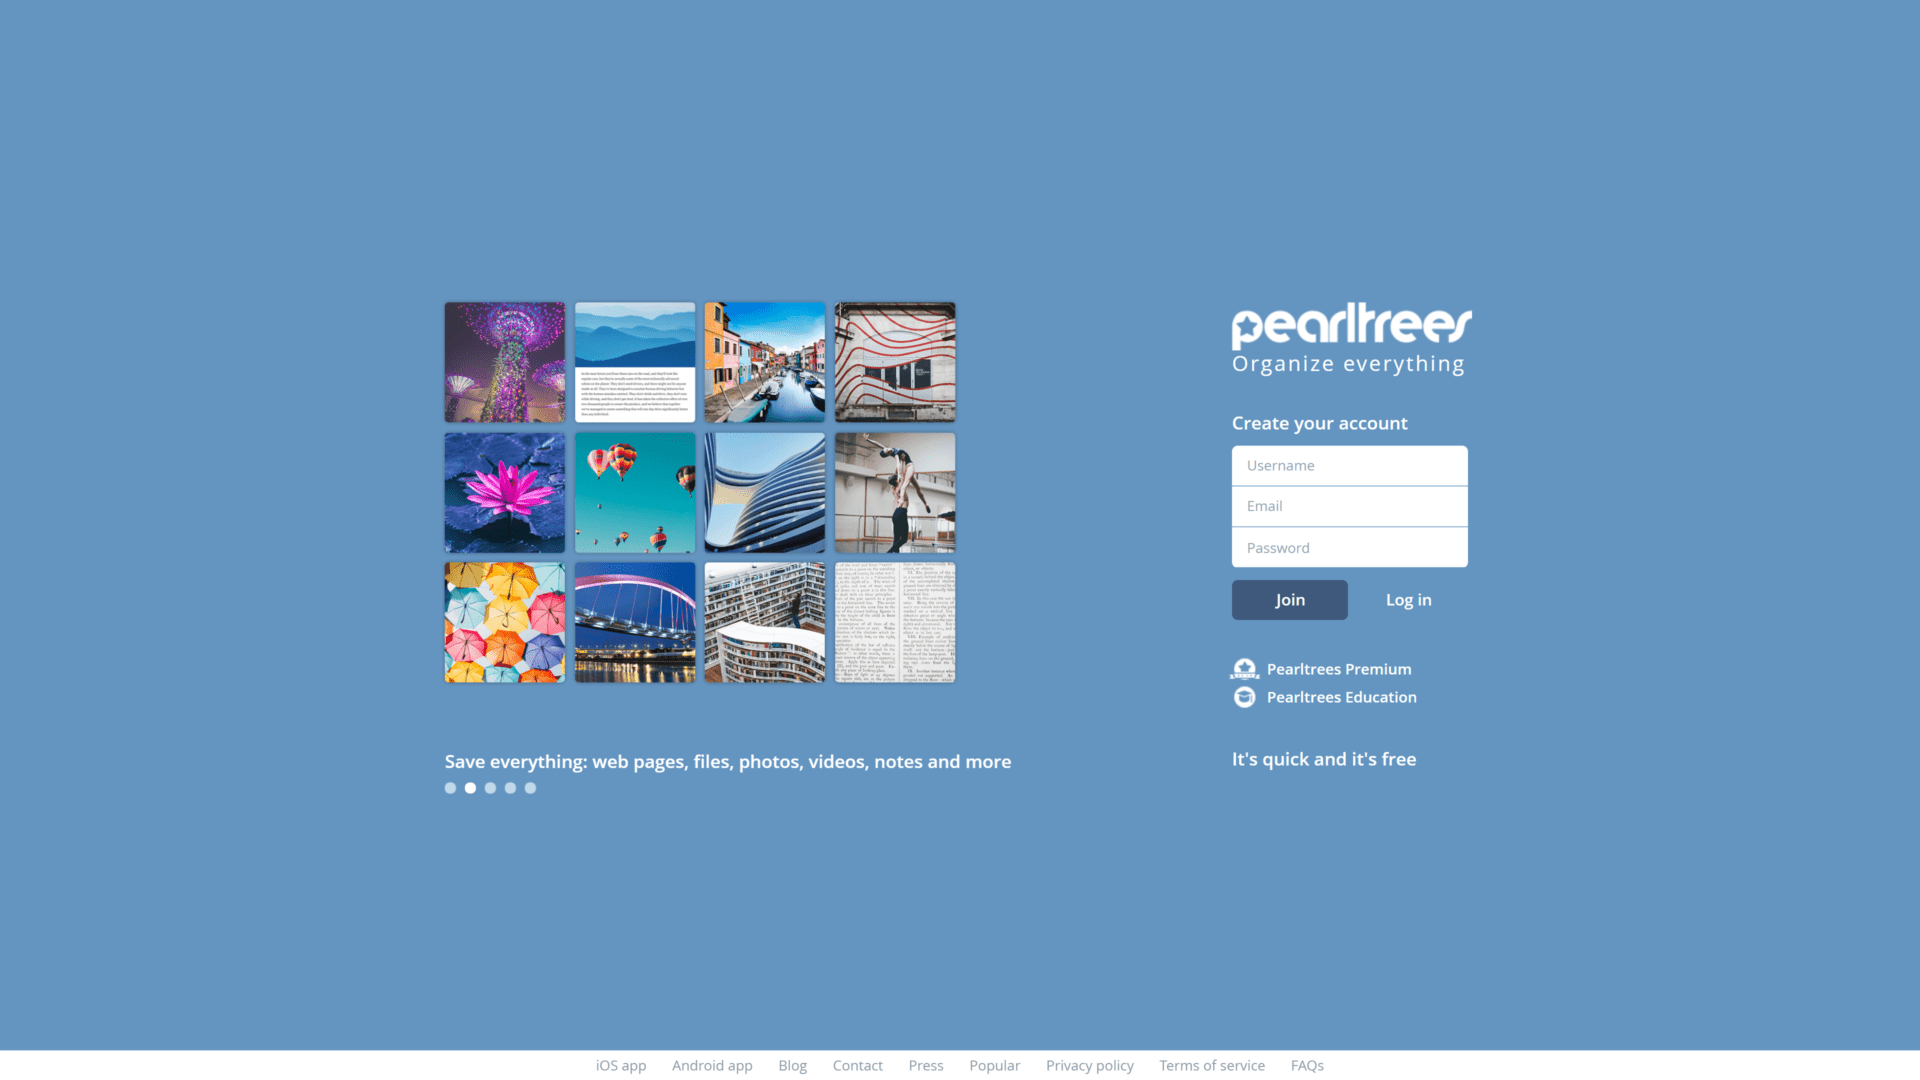 A screenshot of the pearl tree homepage